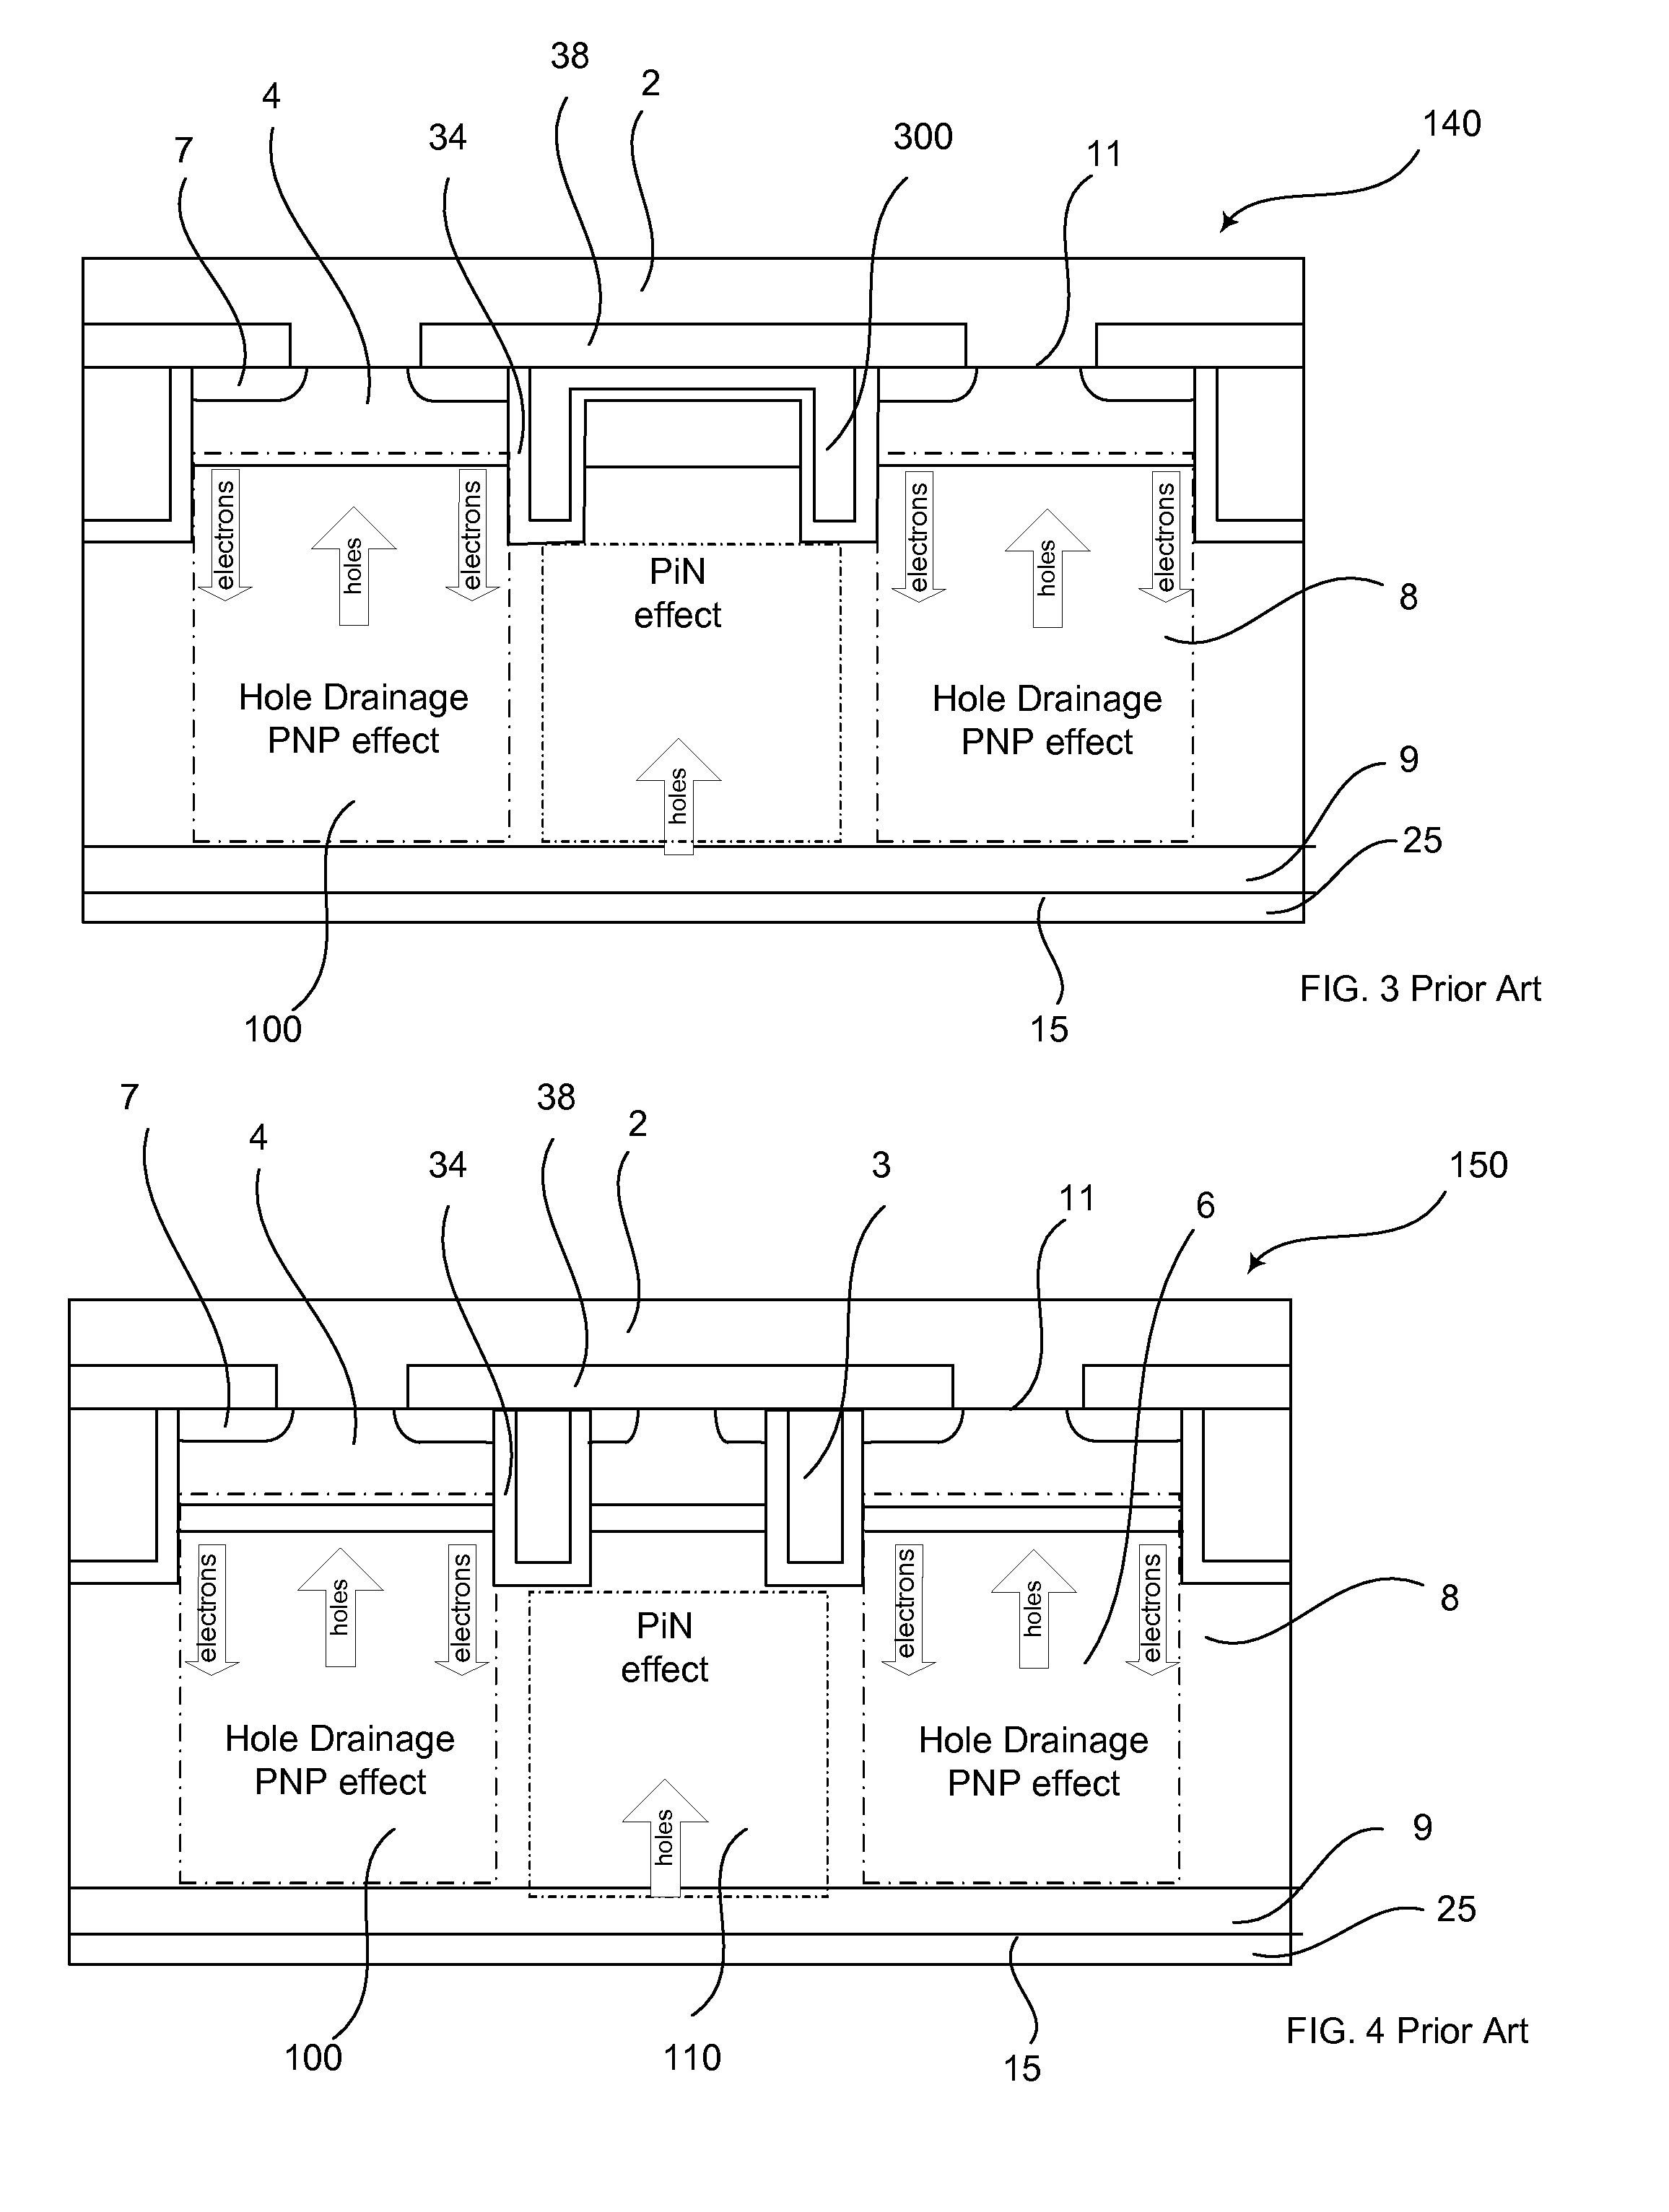 Insulated gate bipolar transistor